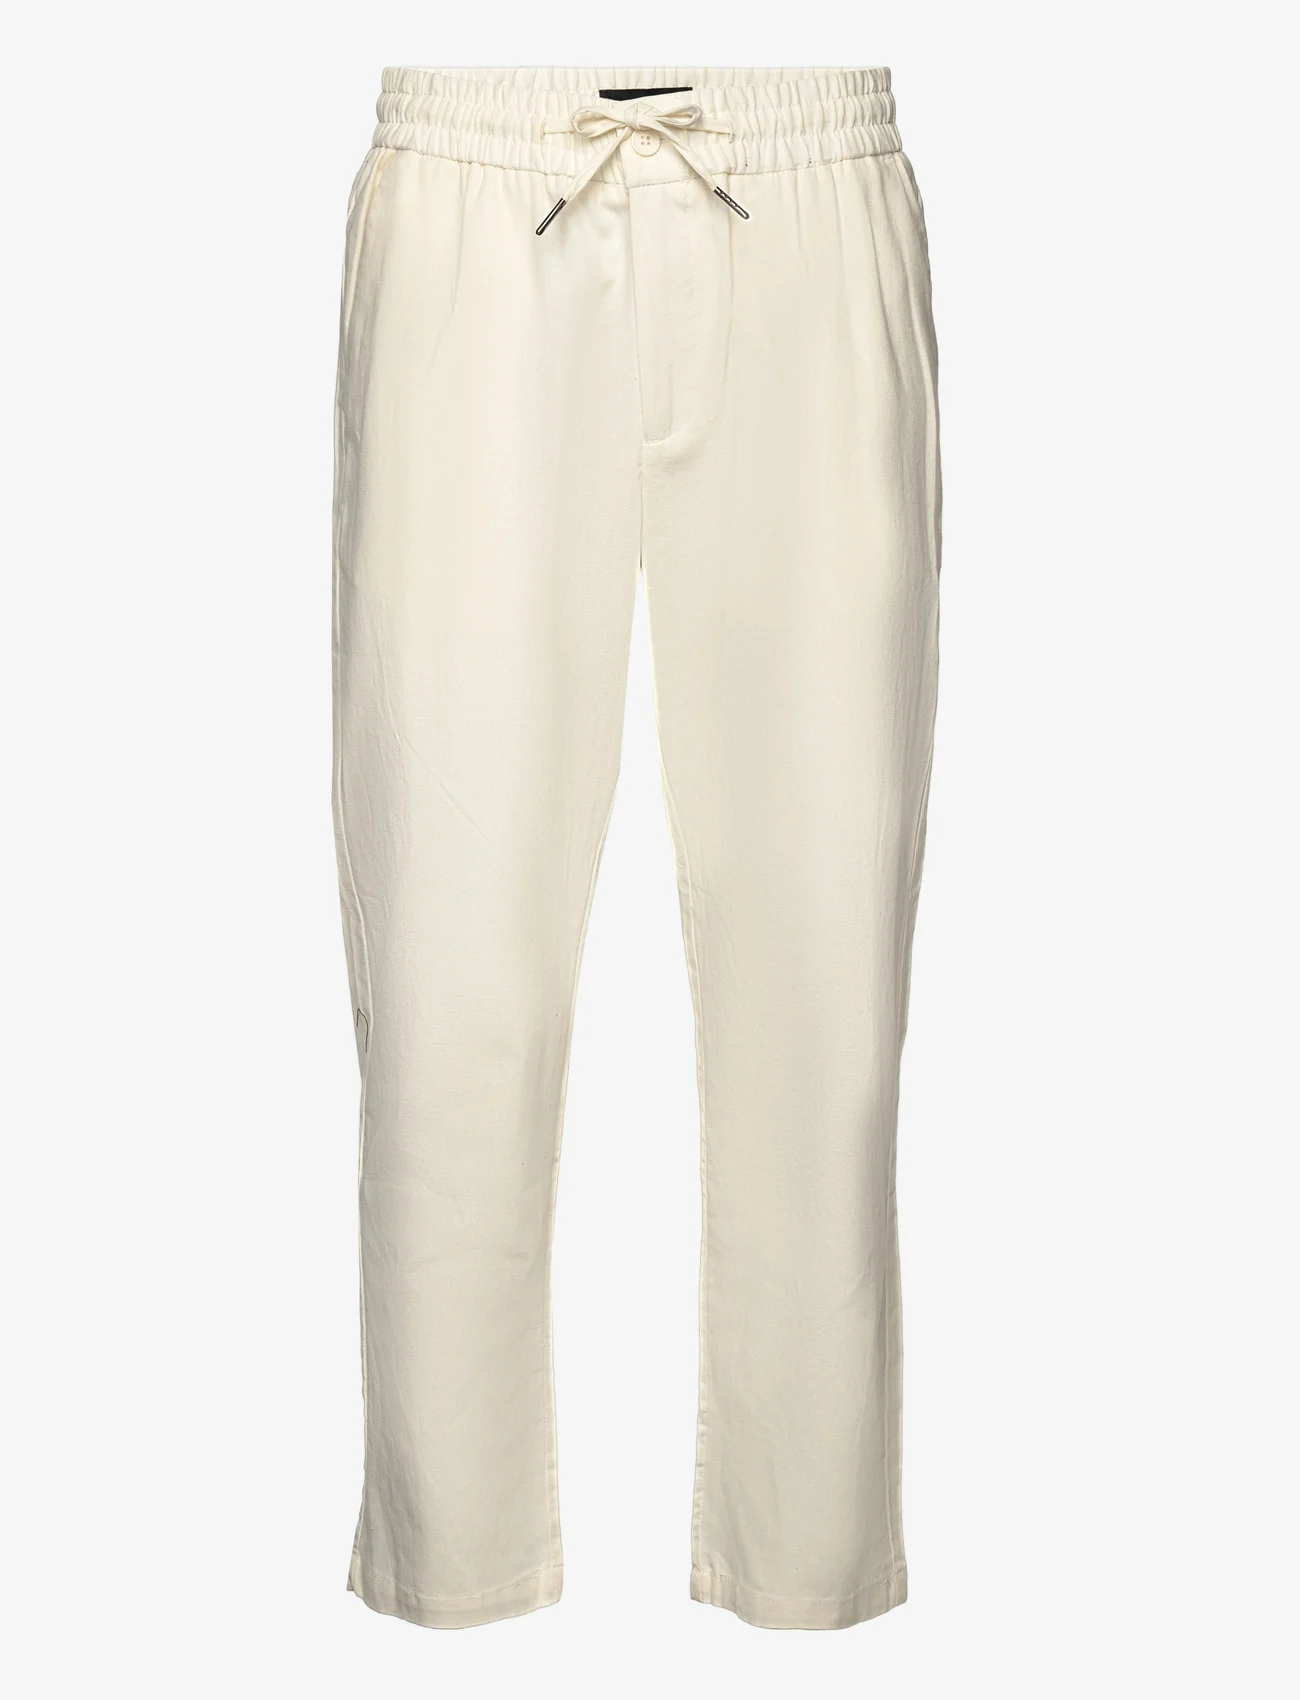 Clean Cut Copenhagen - Barcelona Cotton / Linen Pants - linased püksid - ecru - 0